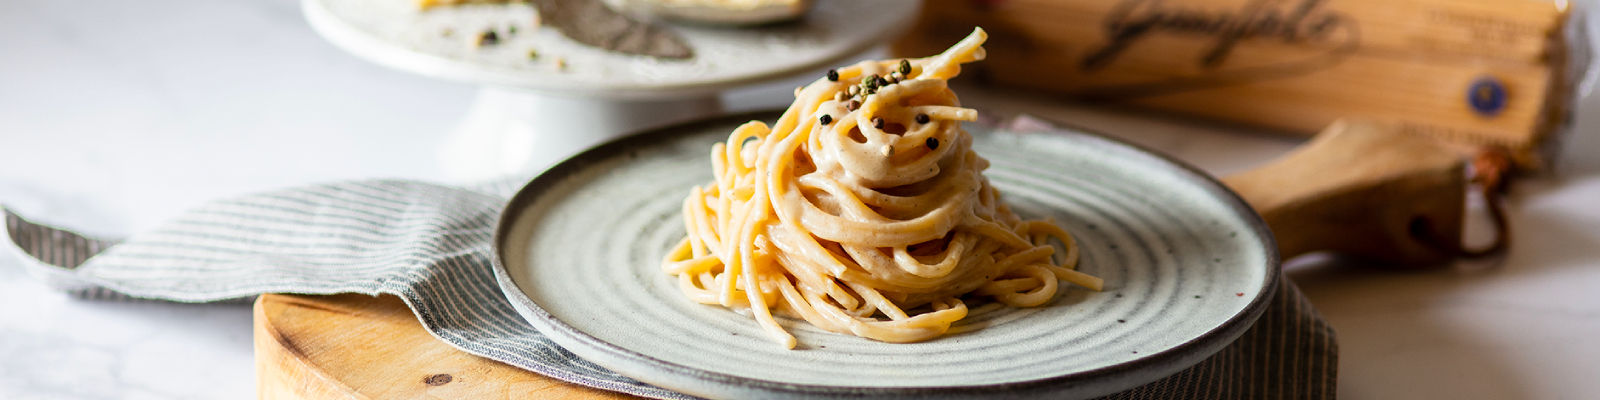 Pasta Garofalo - Spaghetti cacio e pepe